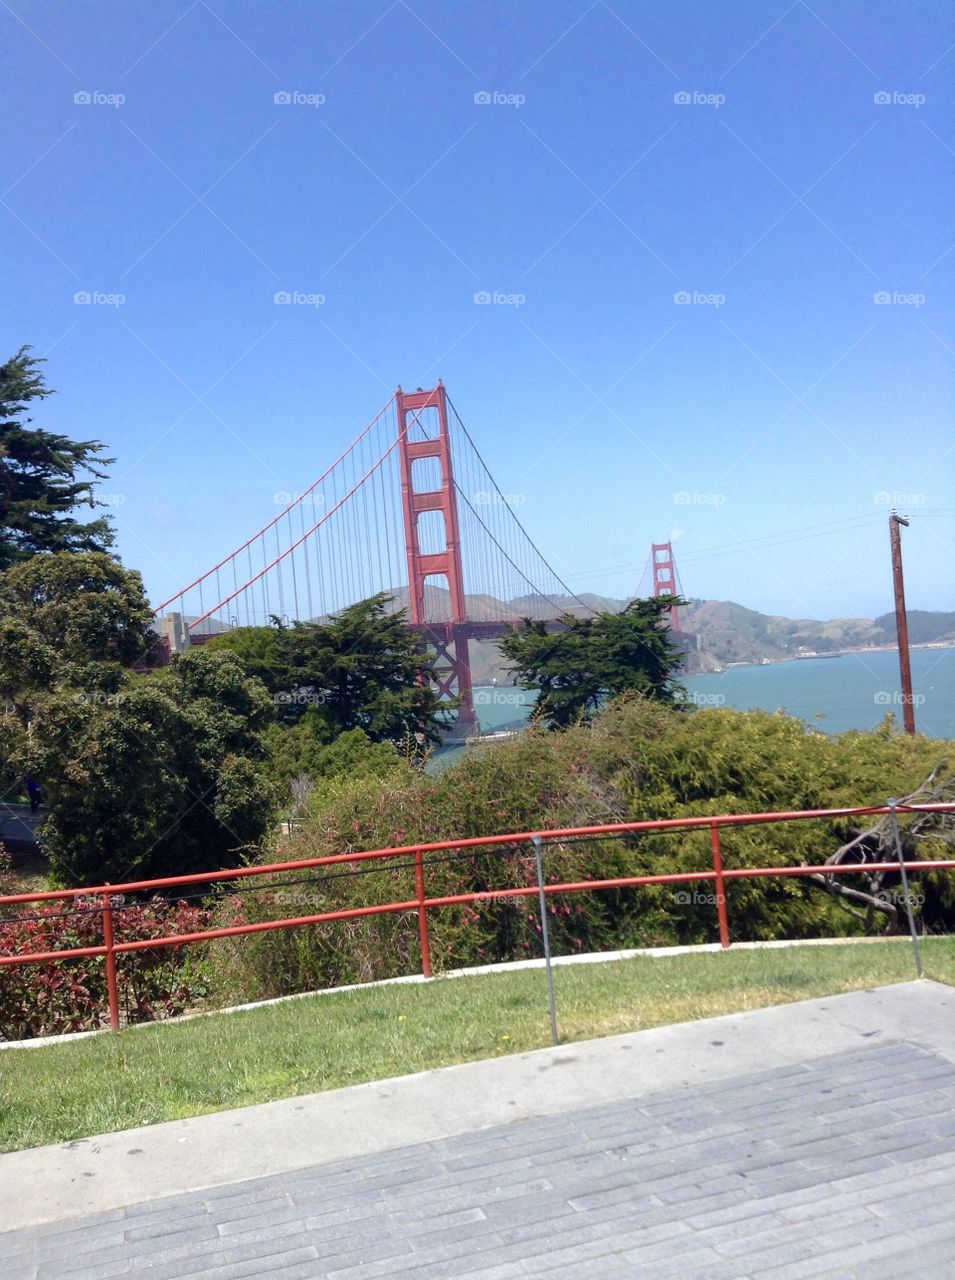 San Francisco’s Golden Gate Bridge on a bright sunny day